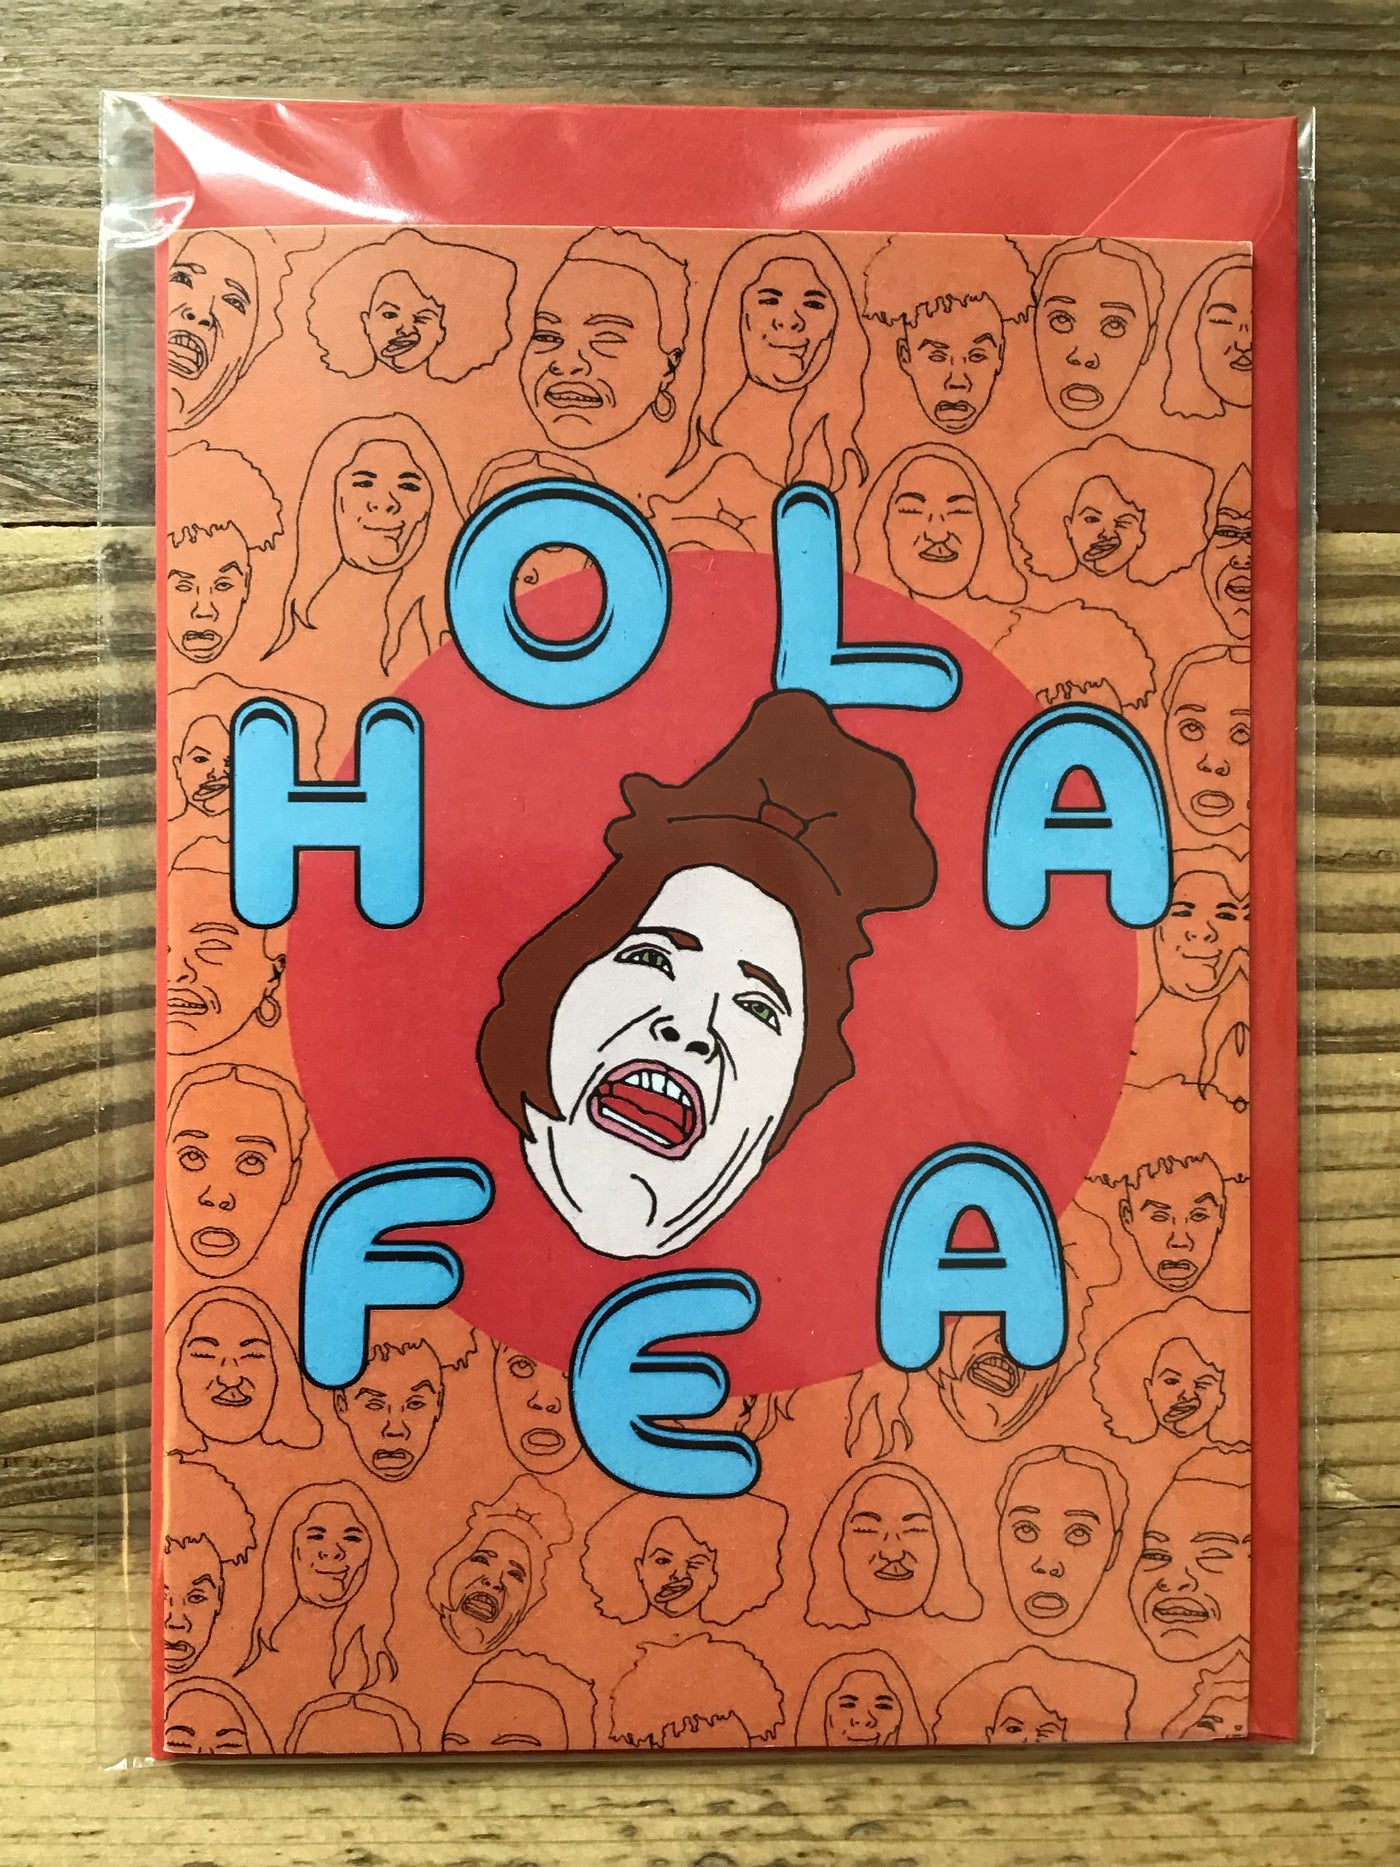 Hola Fea Greetings Card by Jade Hylton